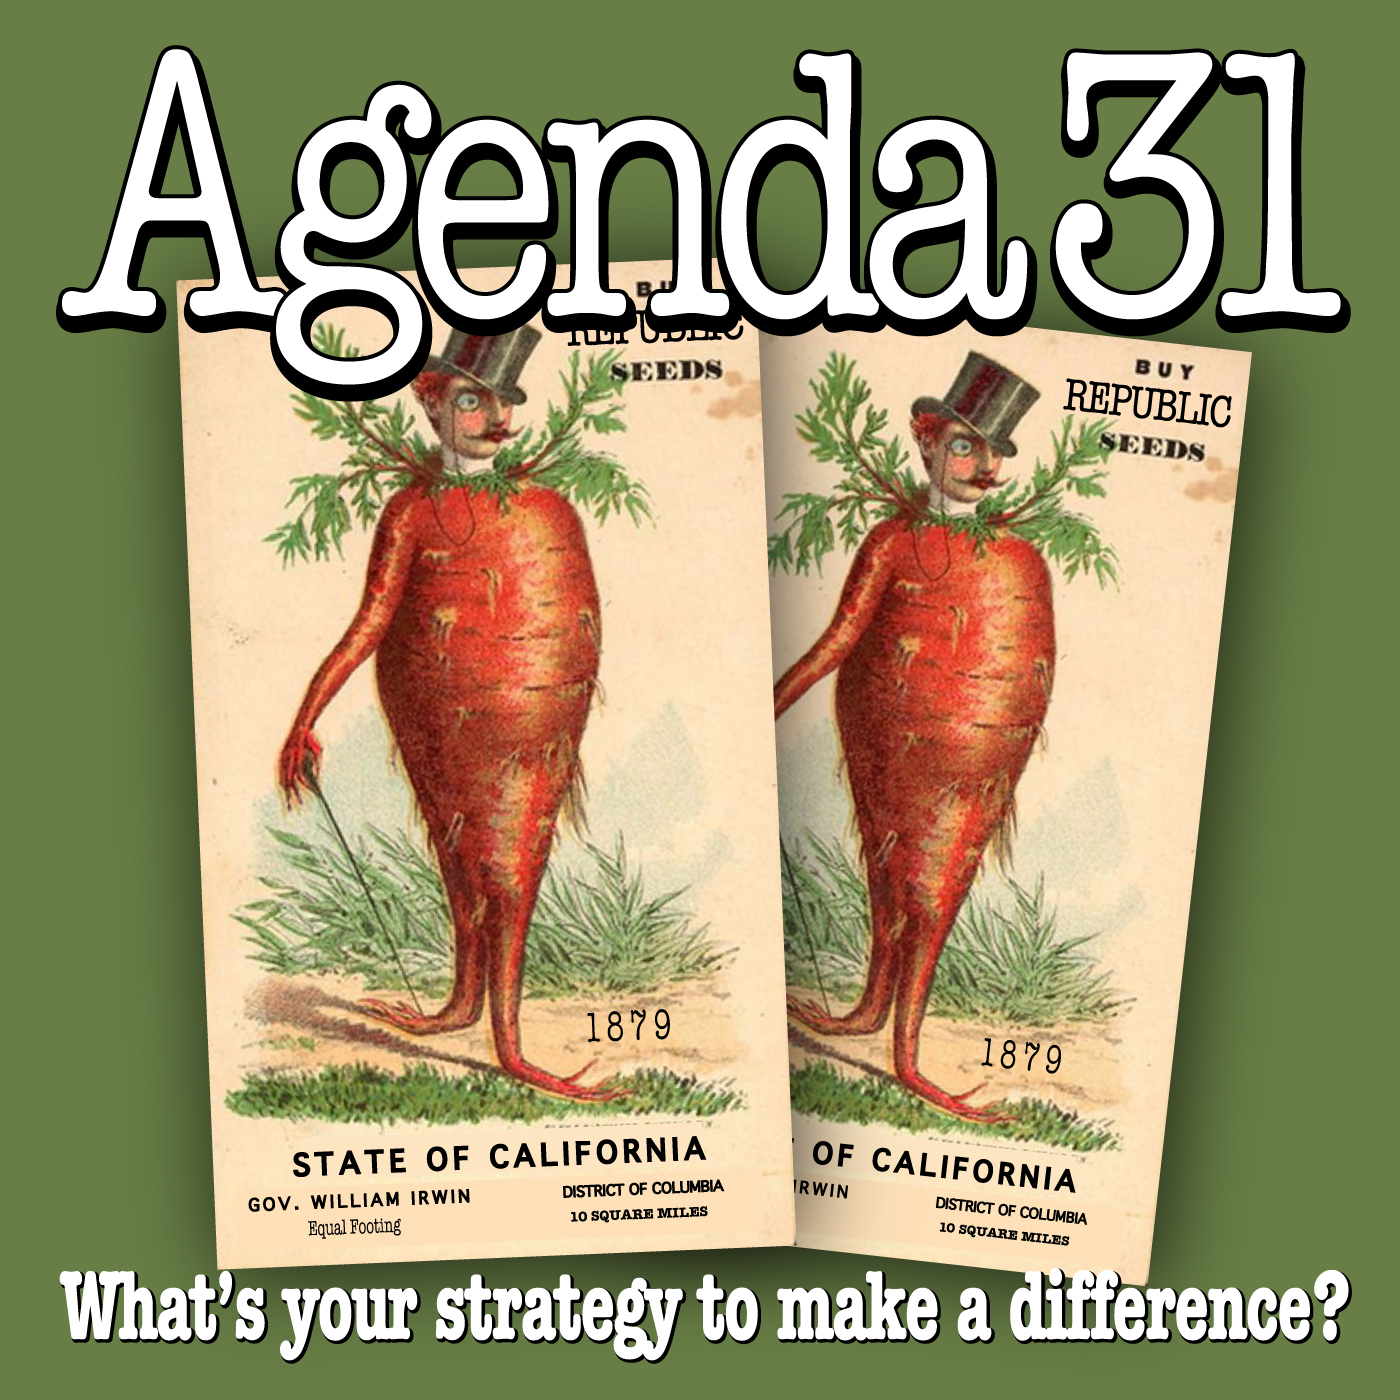 Agenda31 Episode 063 Buy These Seeds